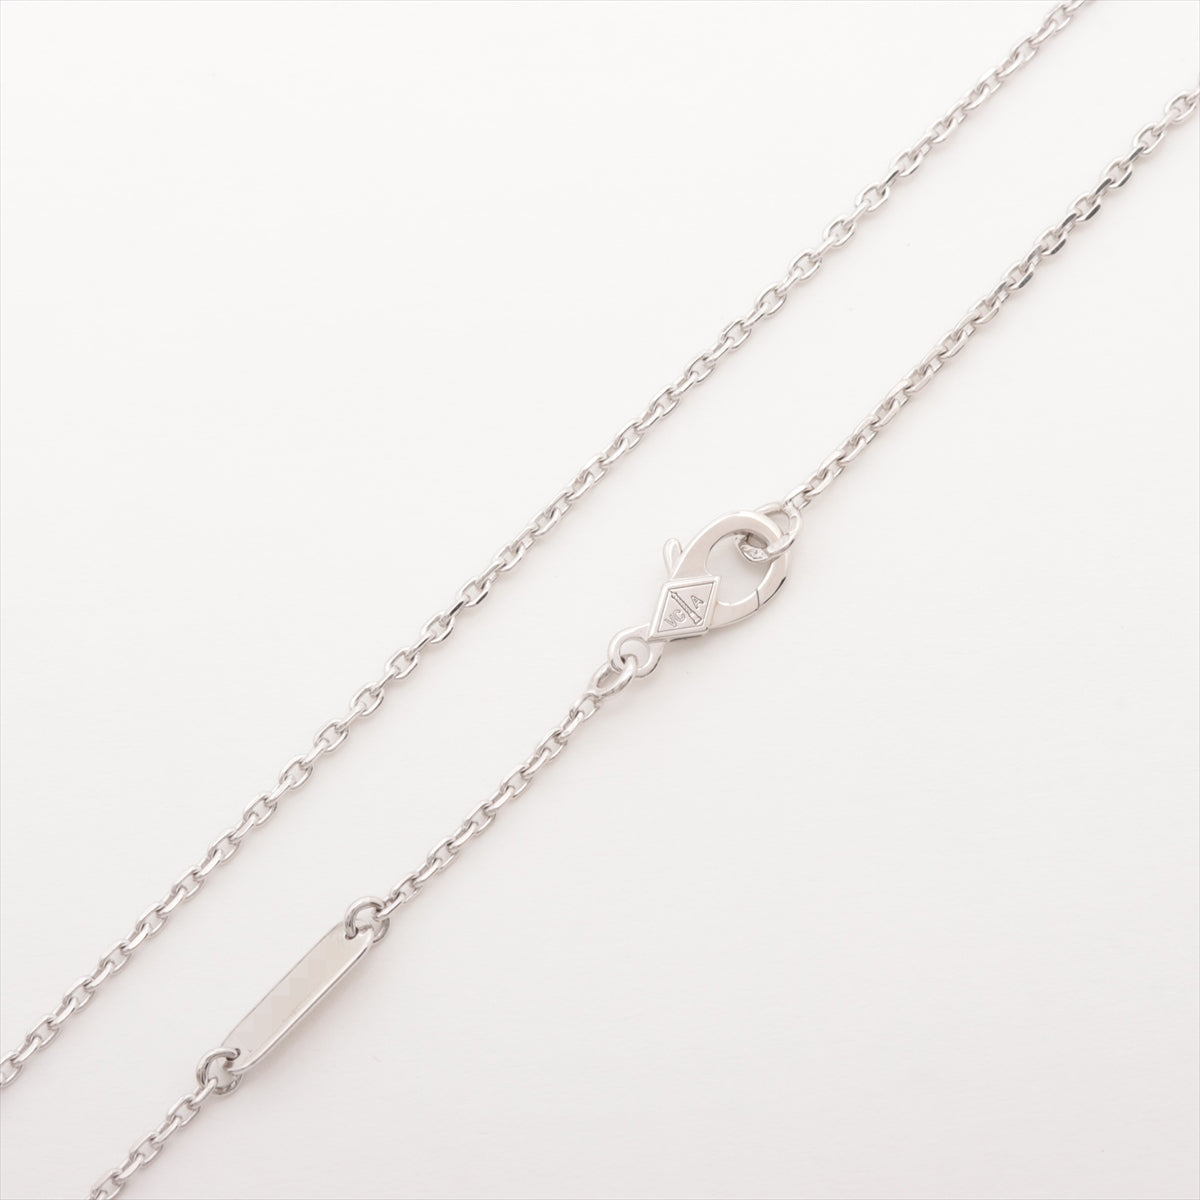 Van Cleef & Arpels Fleurette Small Diamond Necklace 750(WG) 4.7g